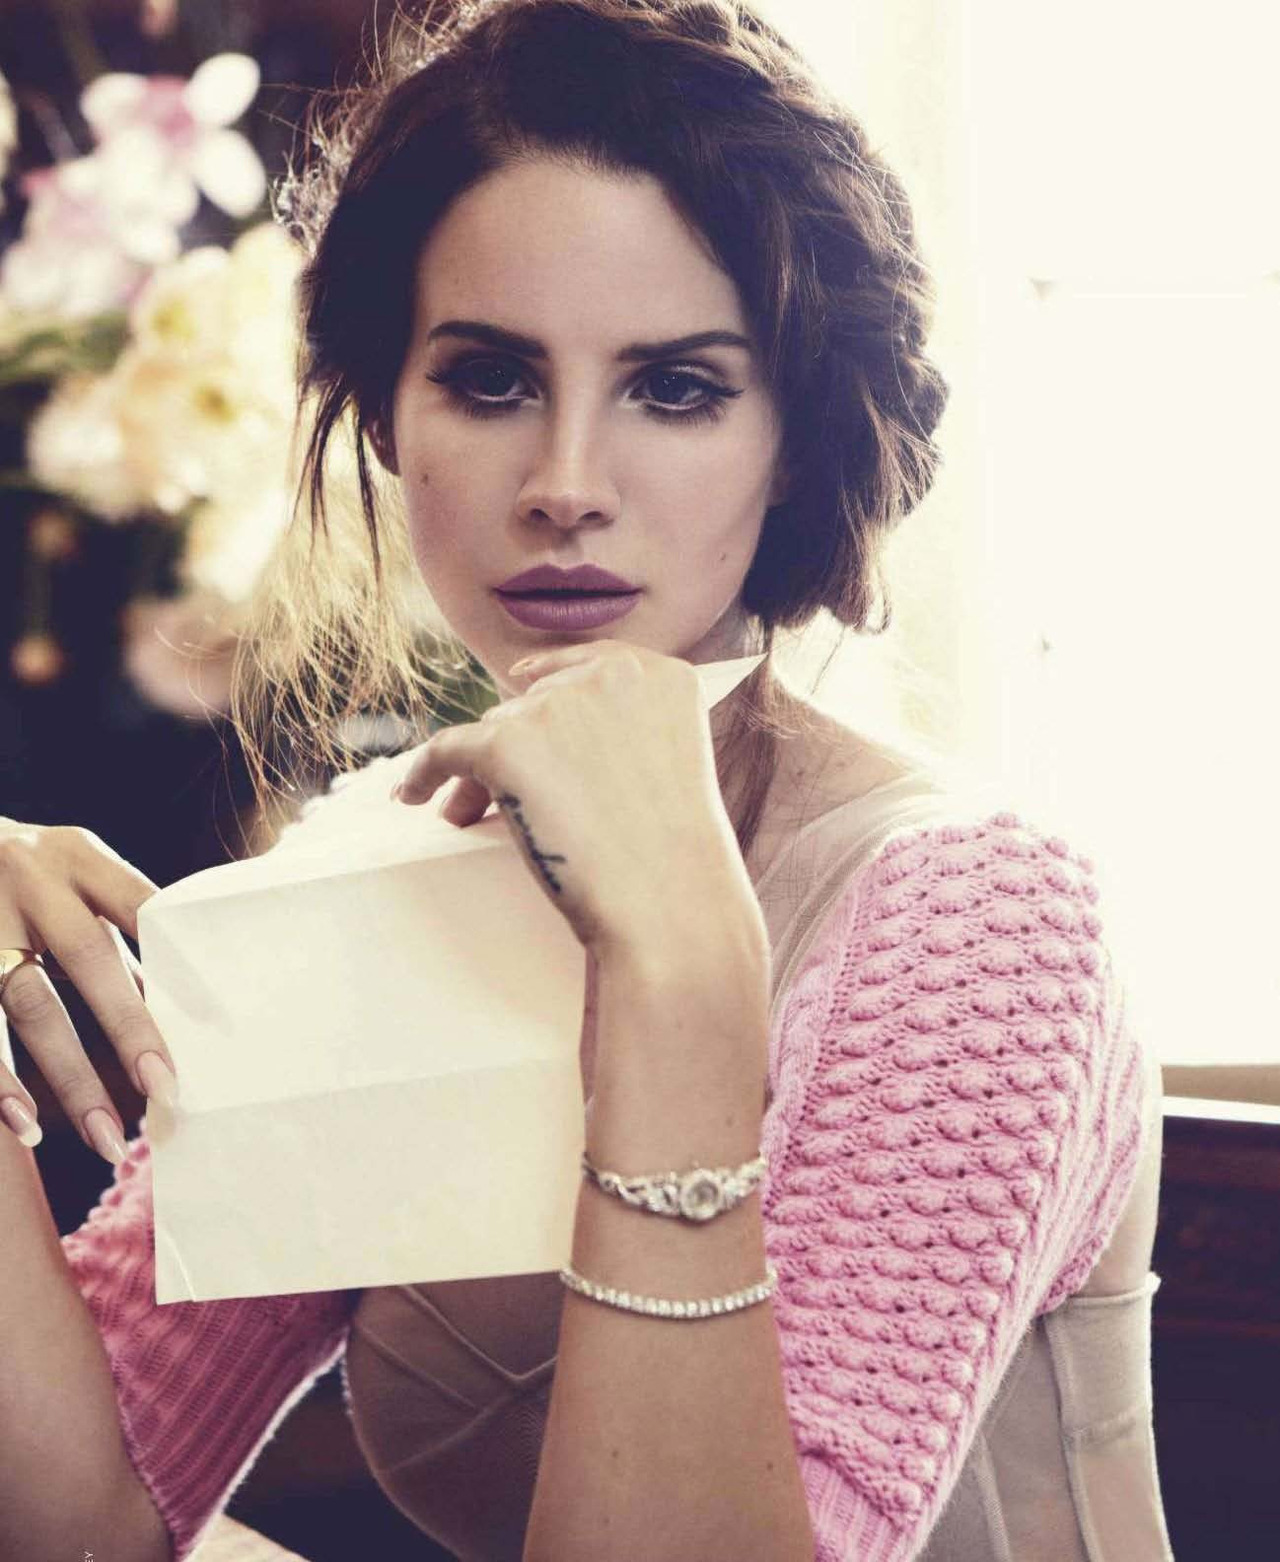 Chase The Glaze Lana Del Rey For Vogue Australia